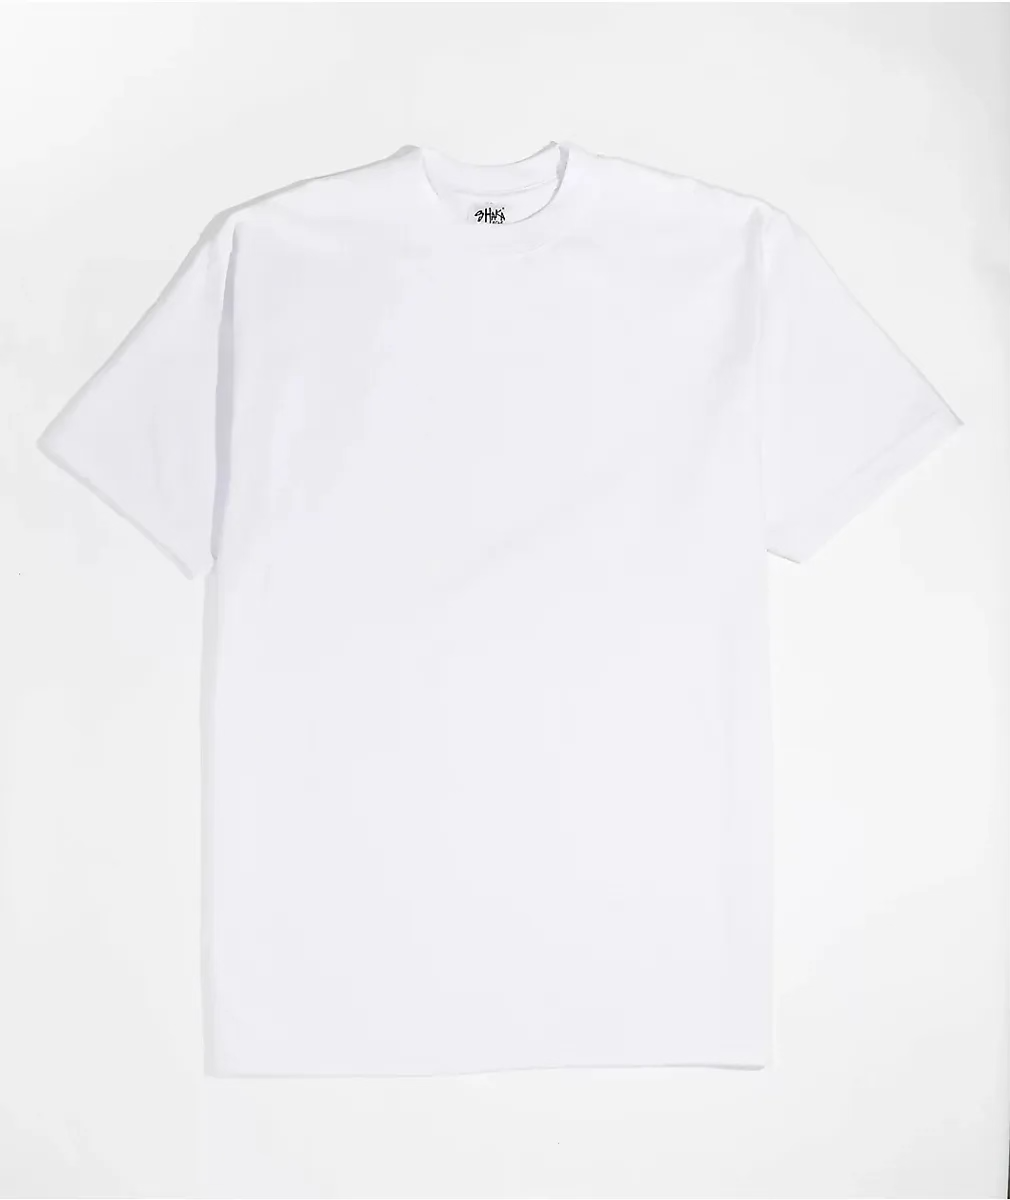 Heavyweight ShakaWear White T-Shirt Custom Print Deal